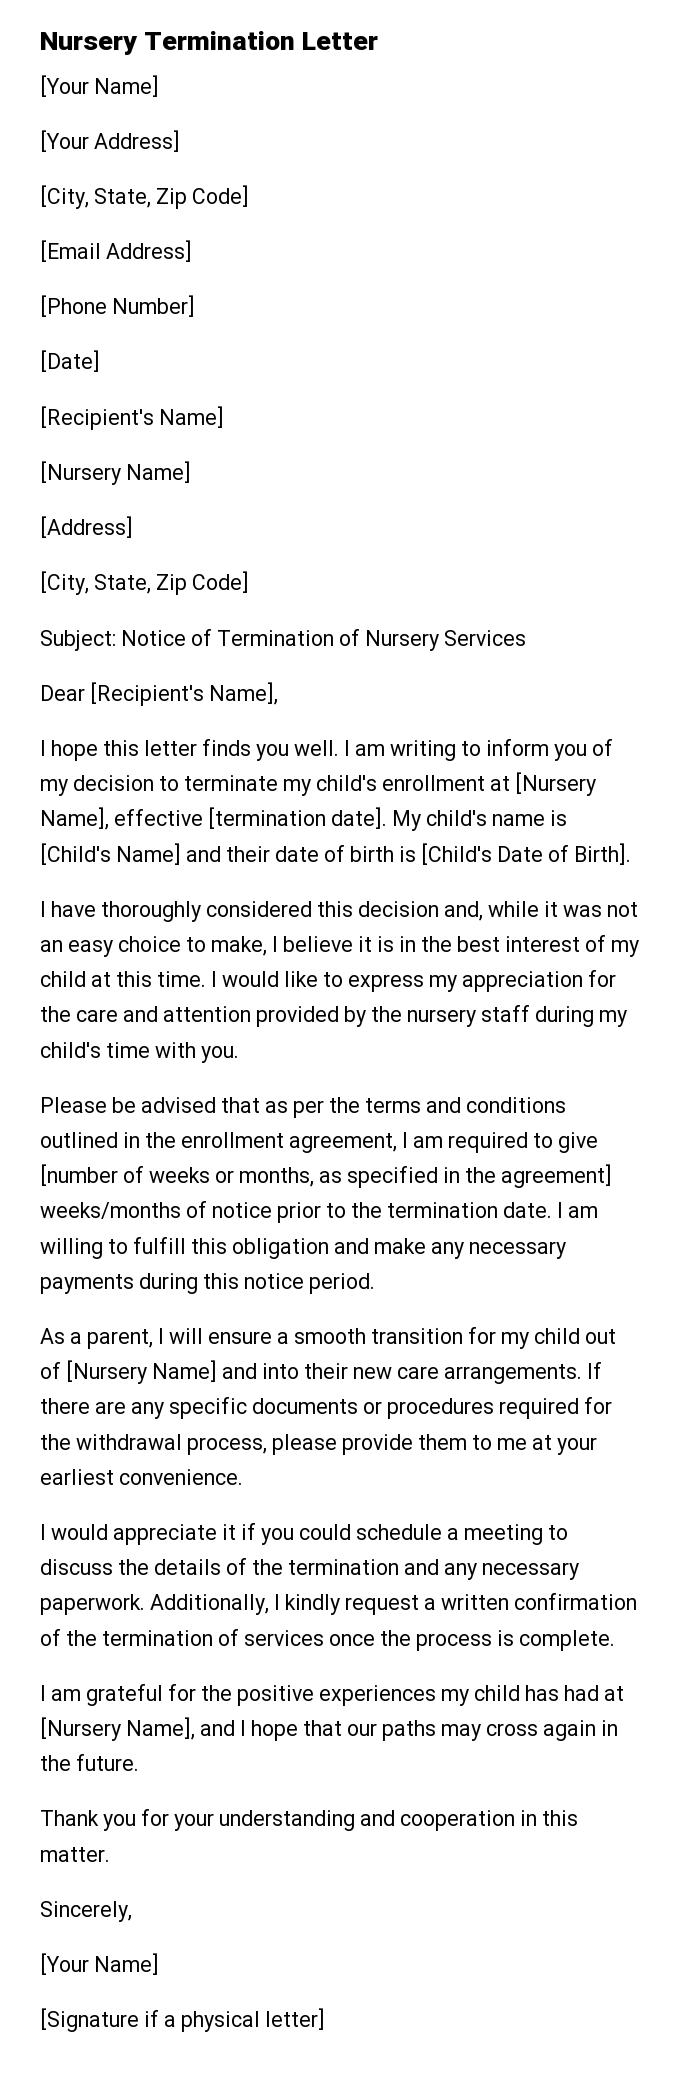 Nursery Termination Letter